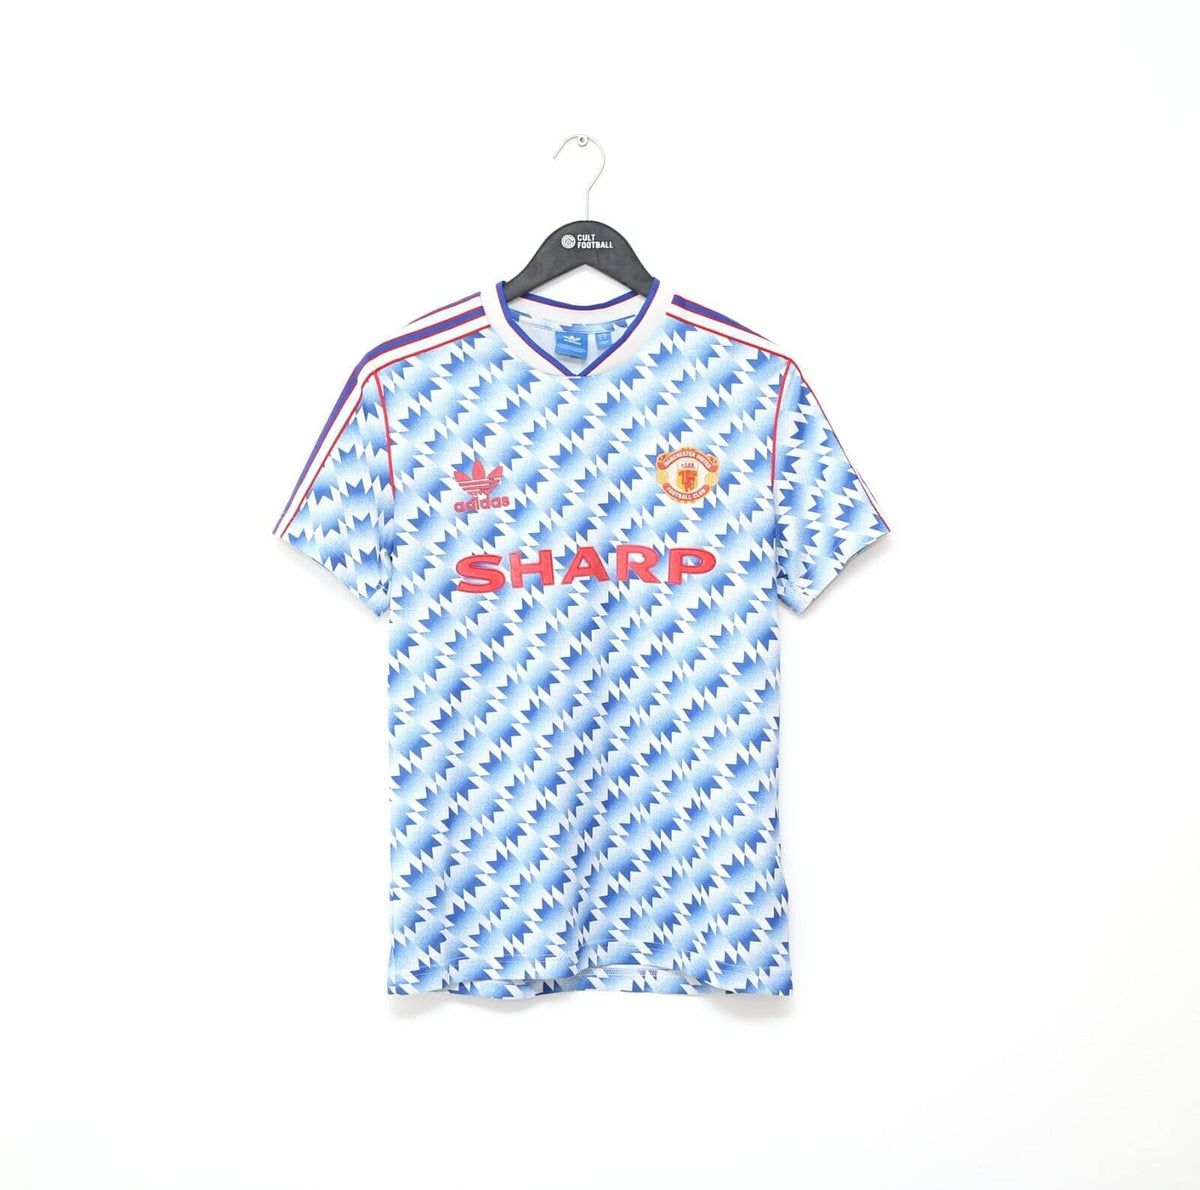 Best Man Utd Kit Set Ever? Adidas Manchester United 1990-92 Home, Away &  Goalkeeper Kits - Closer Look - Footy Headlines